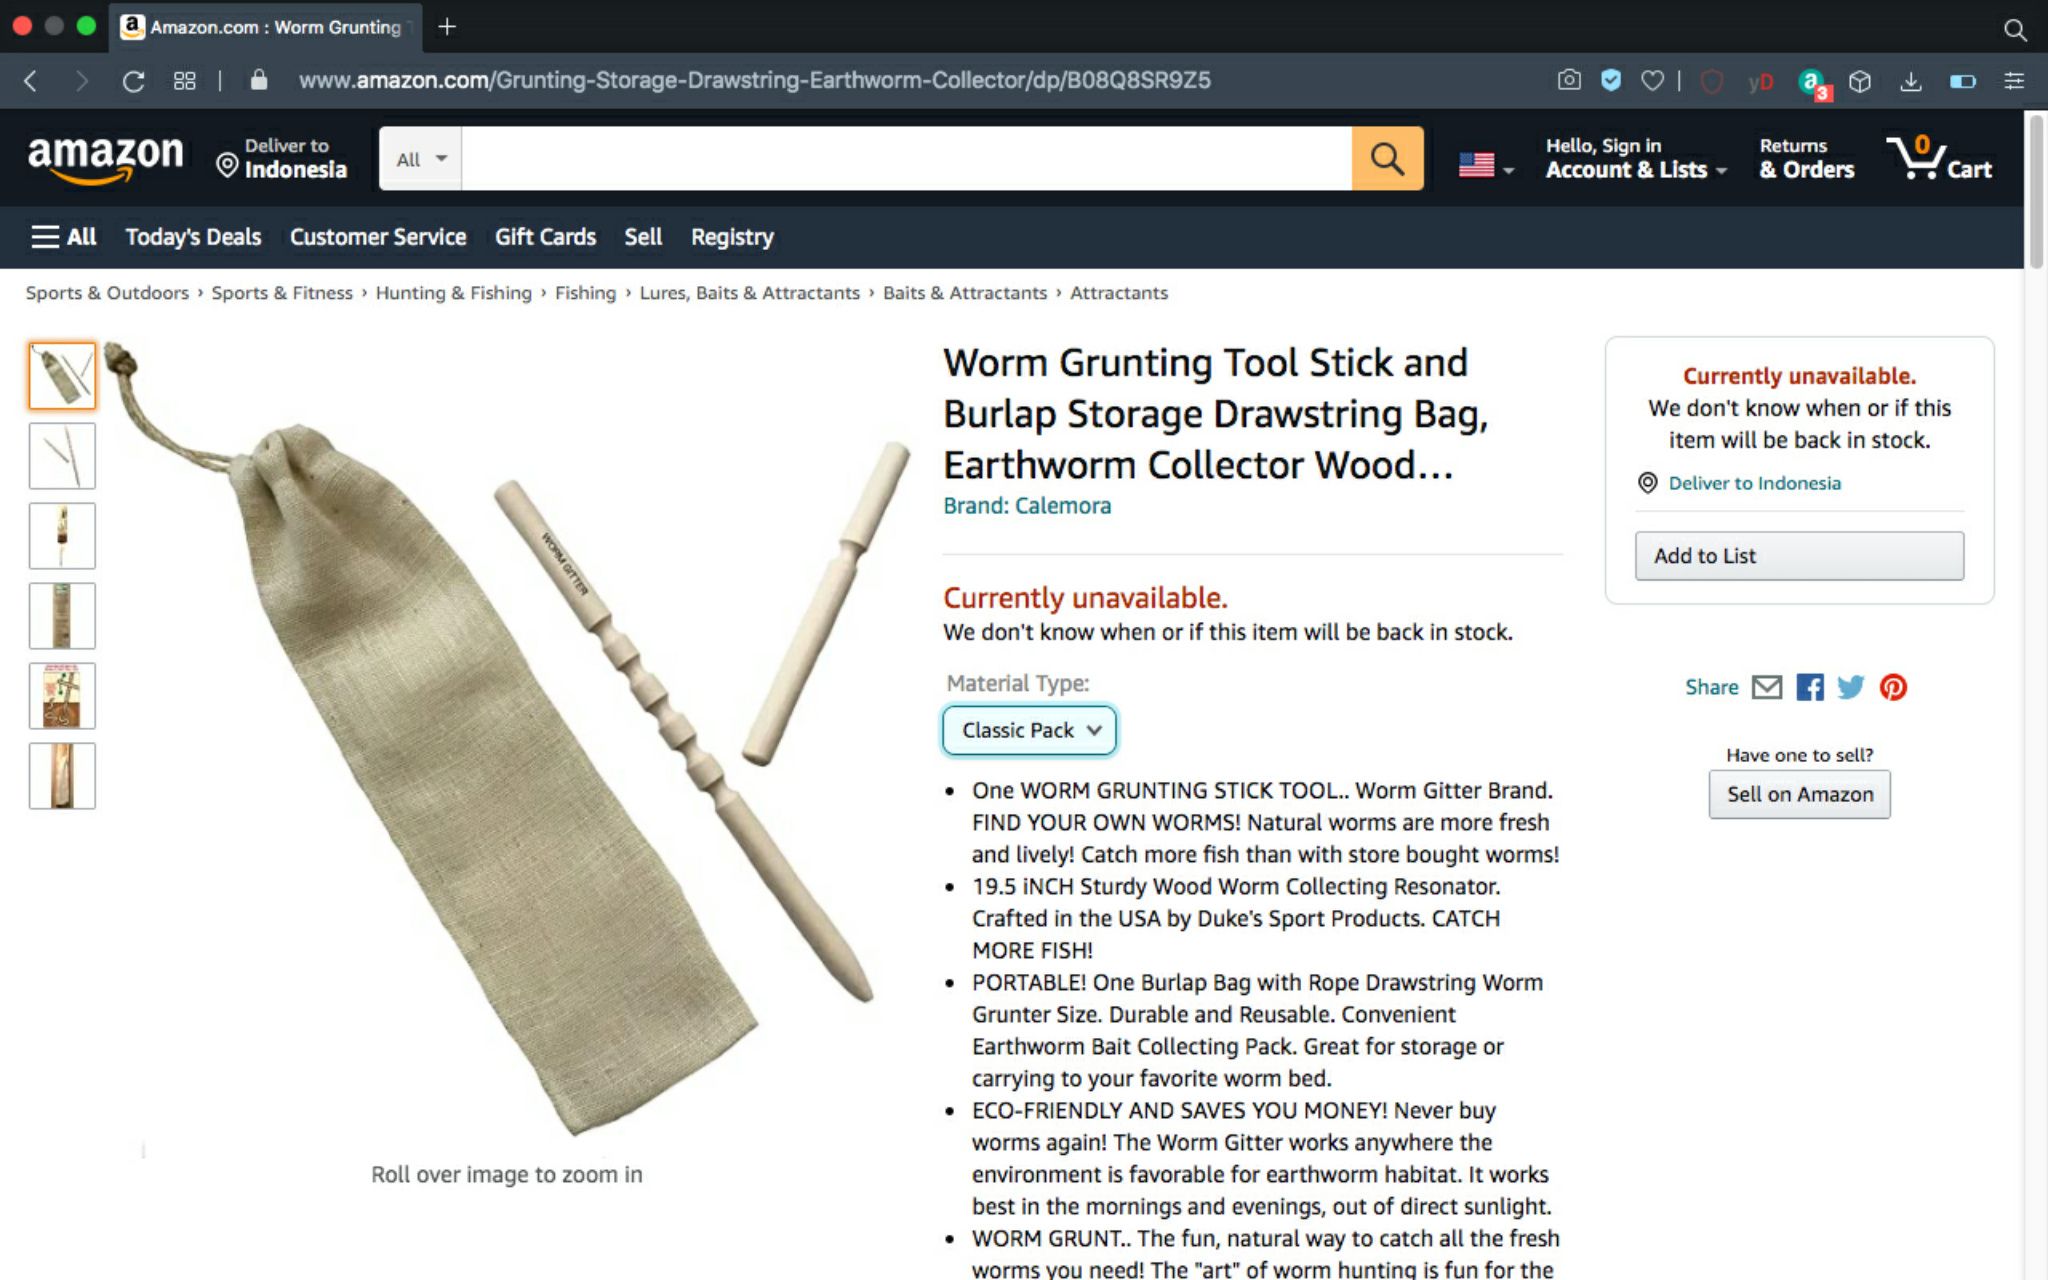 Alat worm gitter dijual di marketplace Amazon.com.